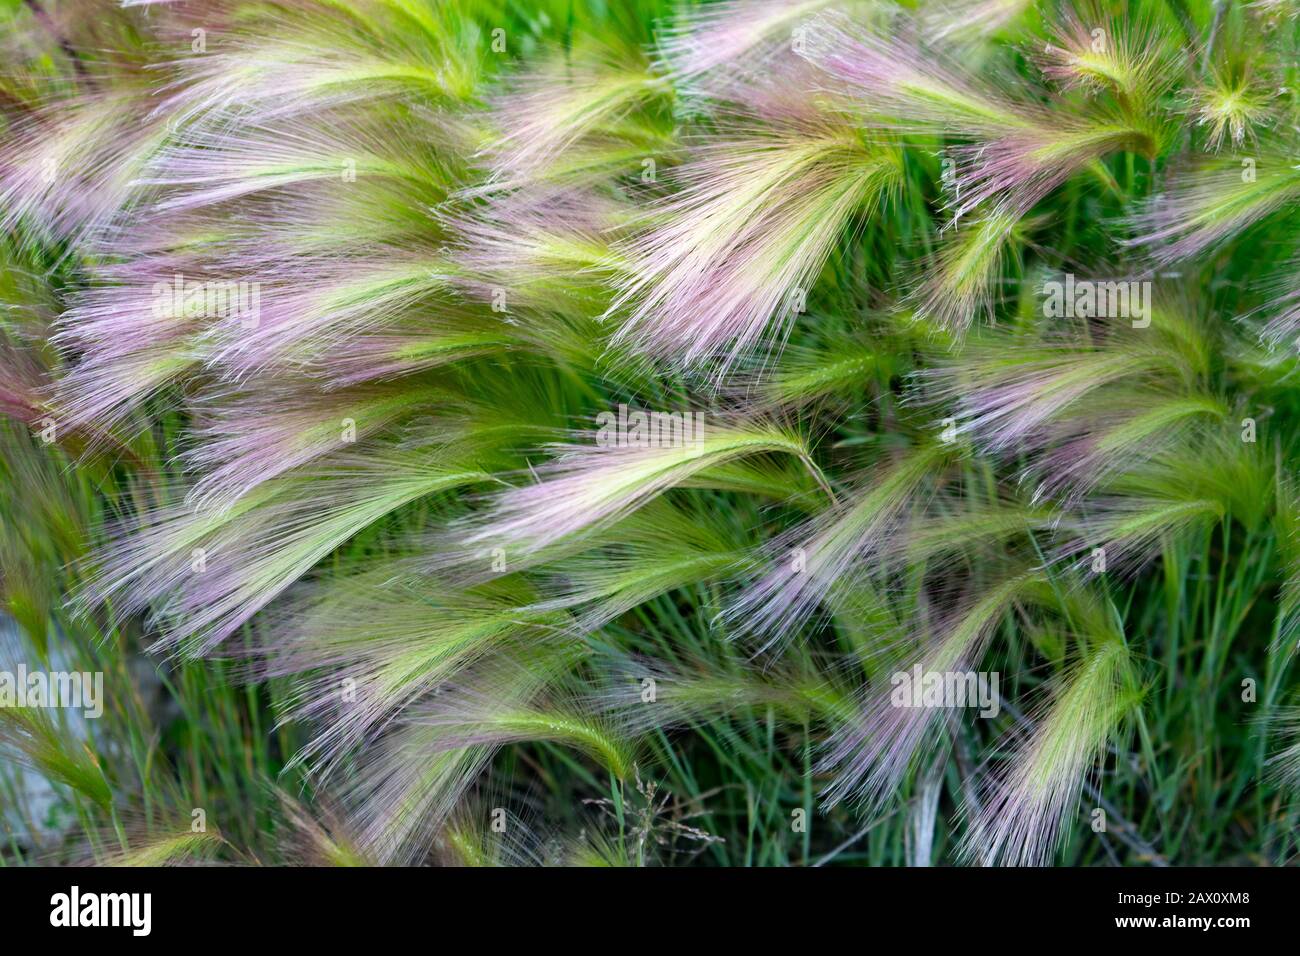 Mat grass. Feather Grass or Needle Grass, Nassella tenuissima, forms already at the slightest breath of wind filigree pattern. Stipa pennata Stock Photo